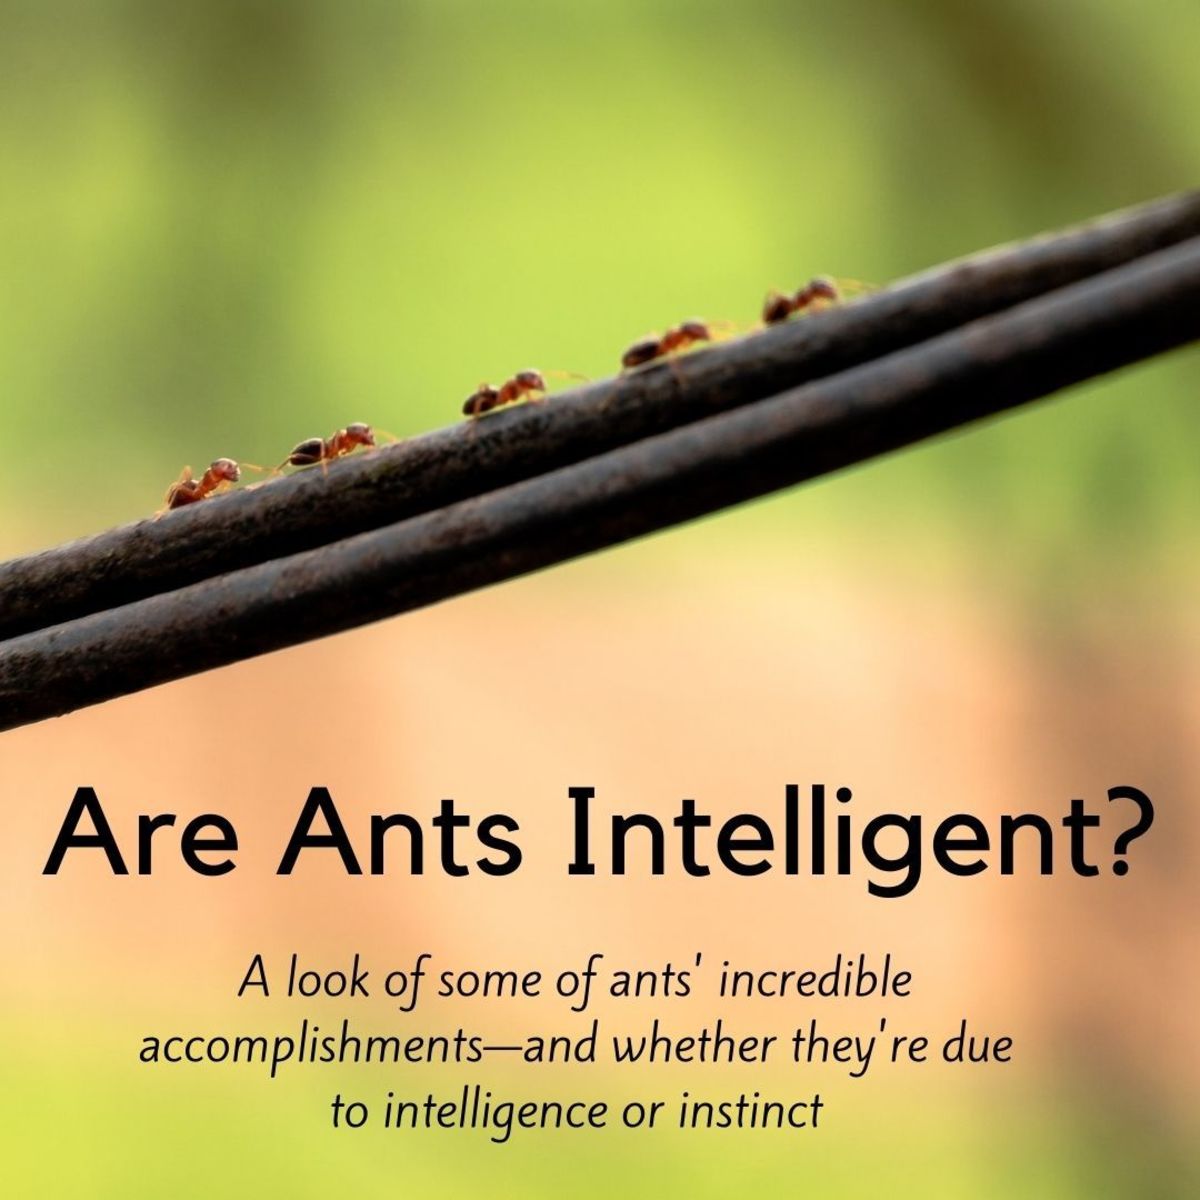 Are Ants Intelligent?